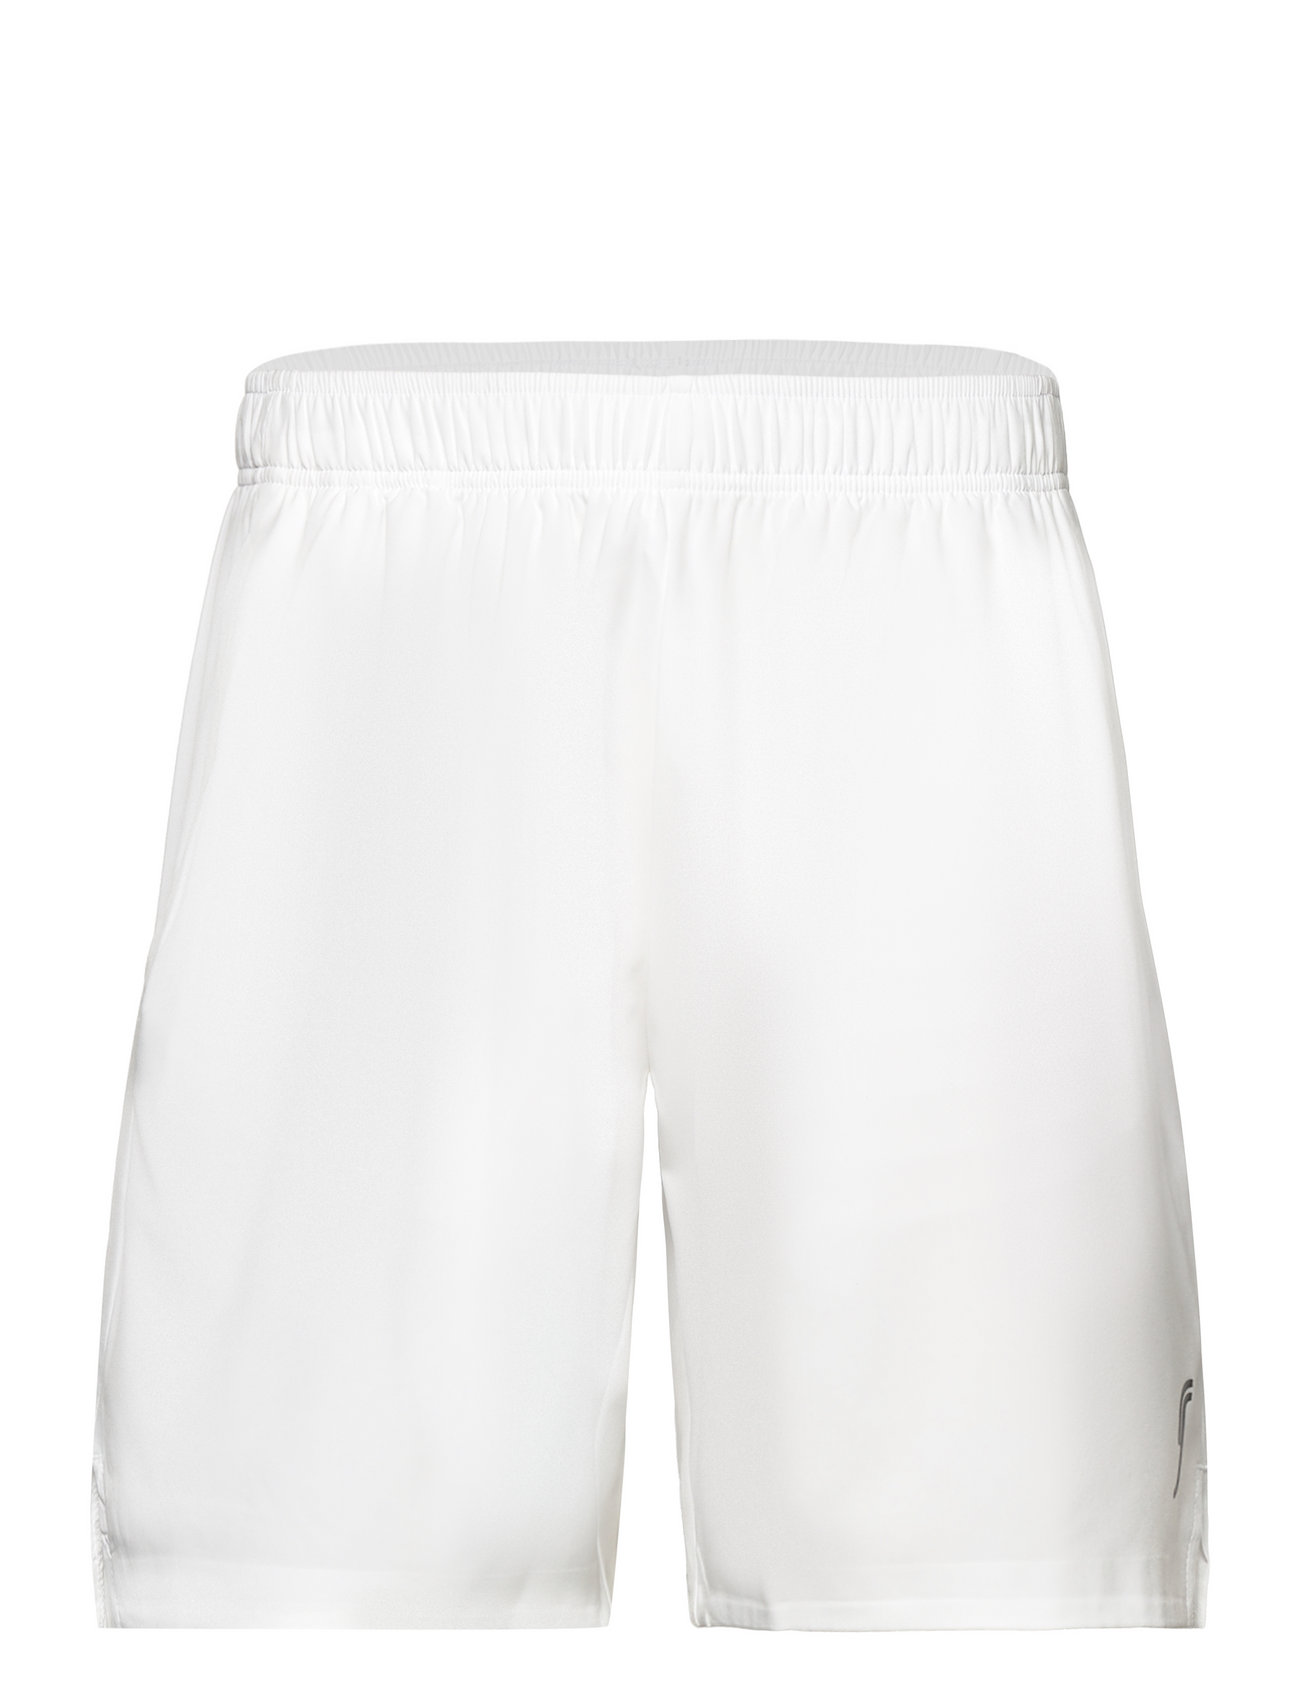 Men’s Performance Shorts Sport Shorts Sport Shorts White RS Sports